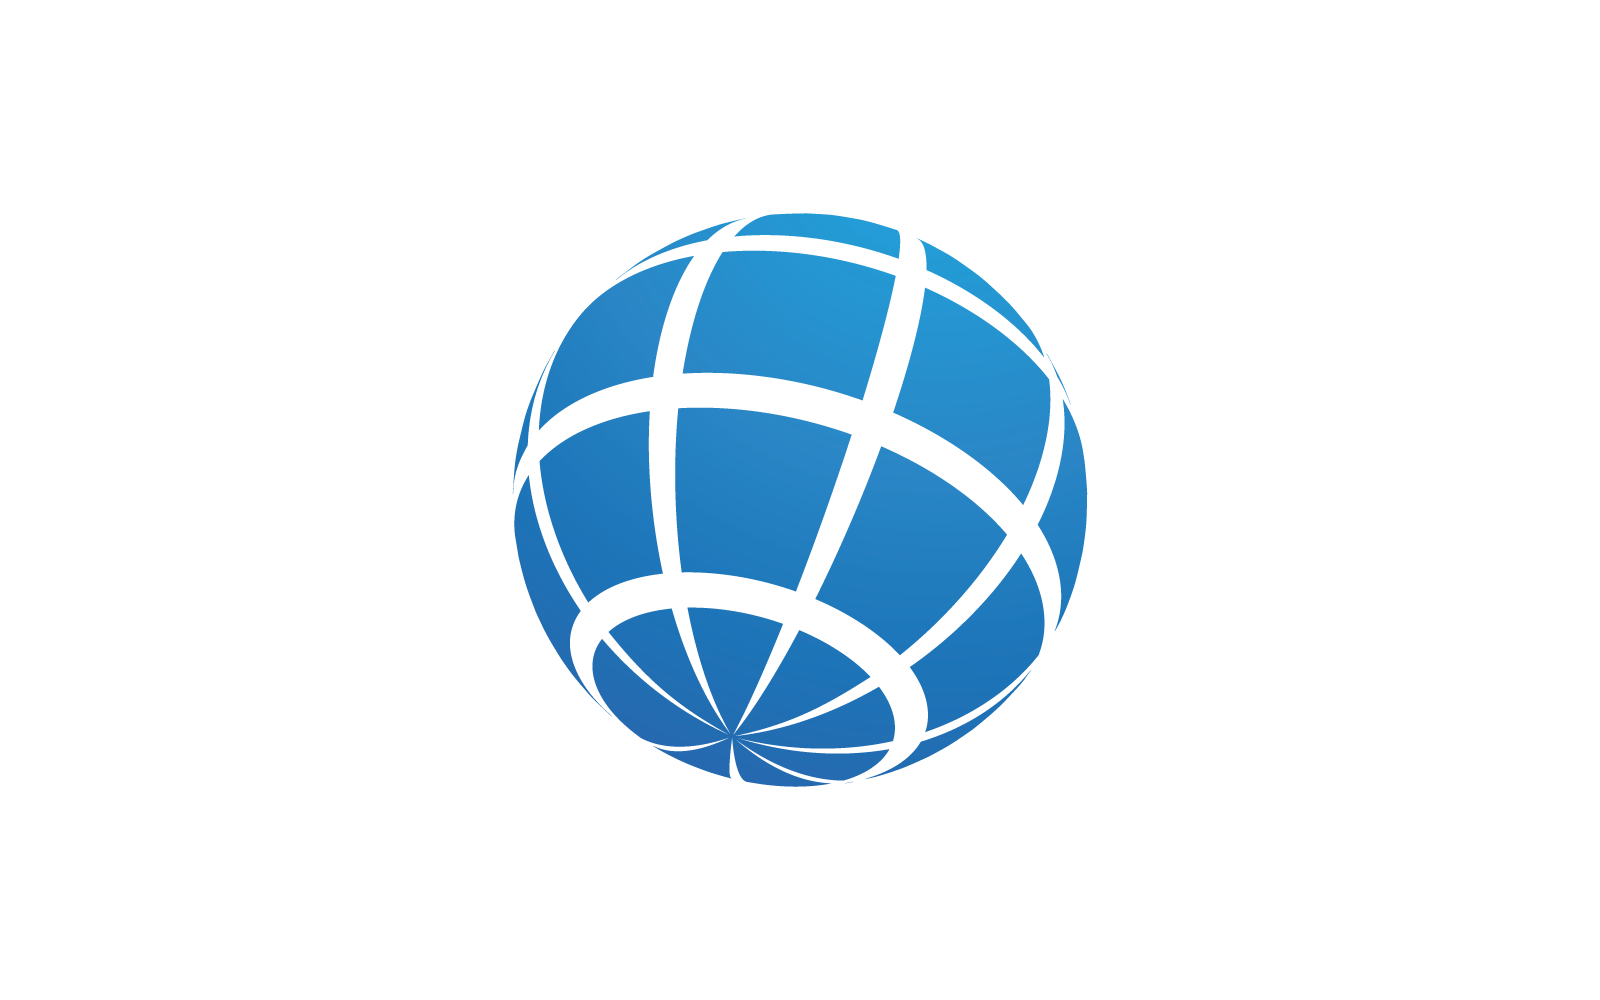 Global technology illustration logo vector design template